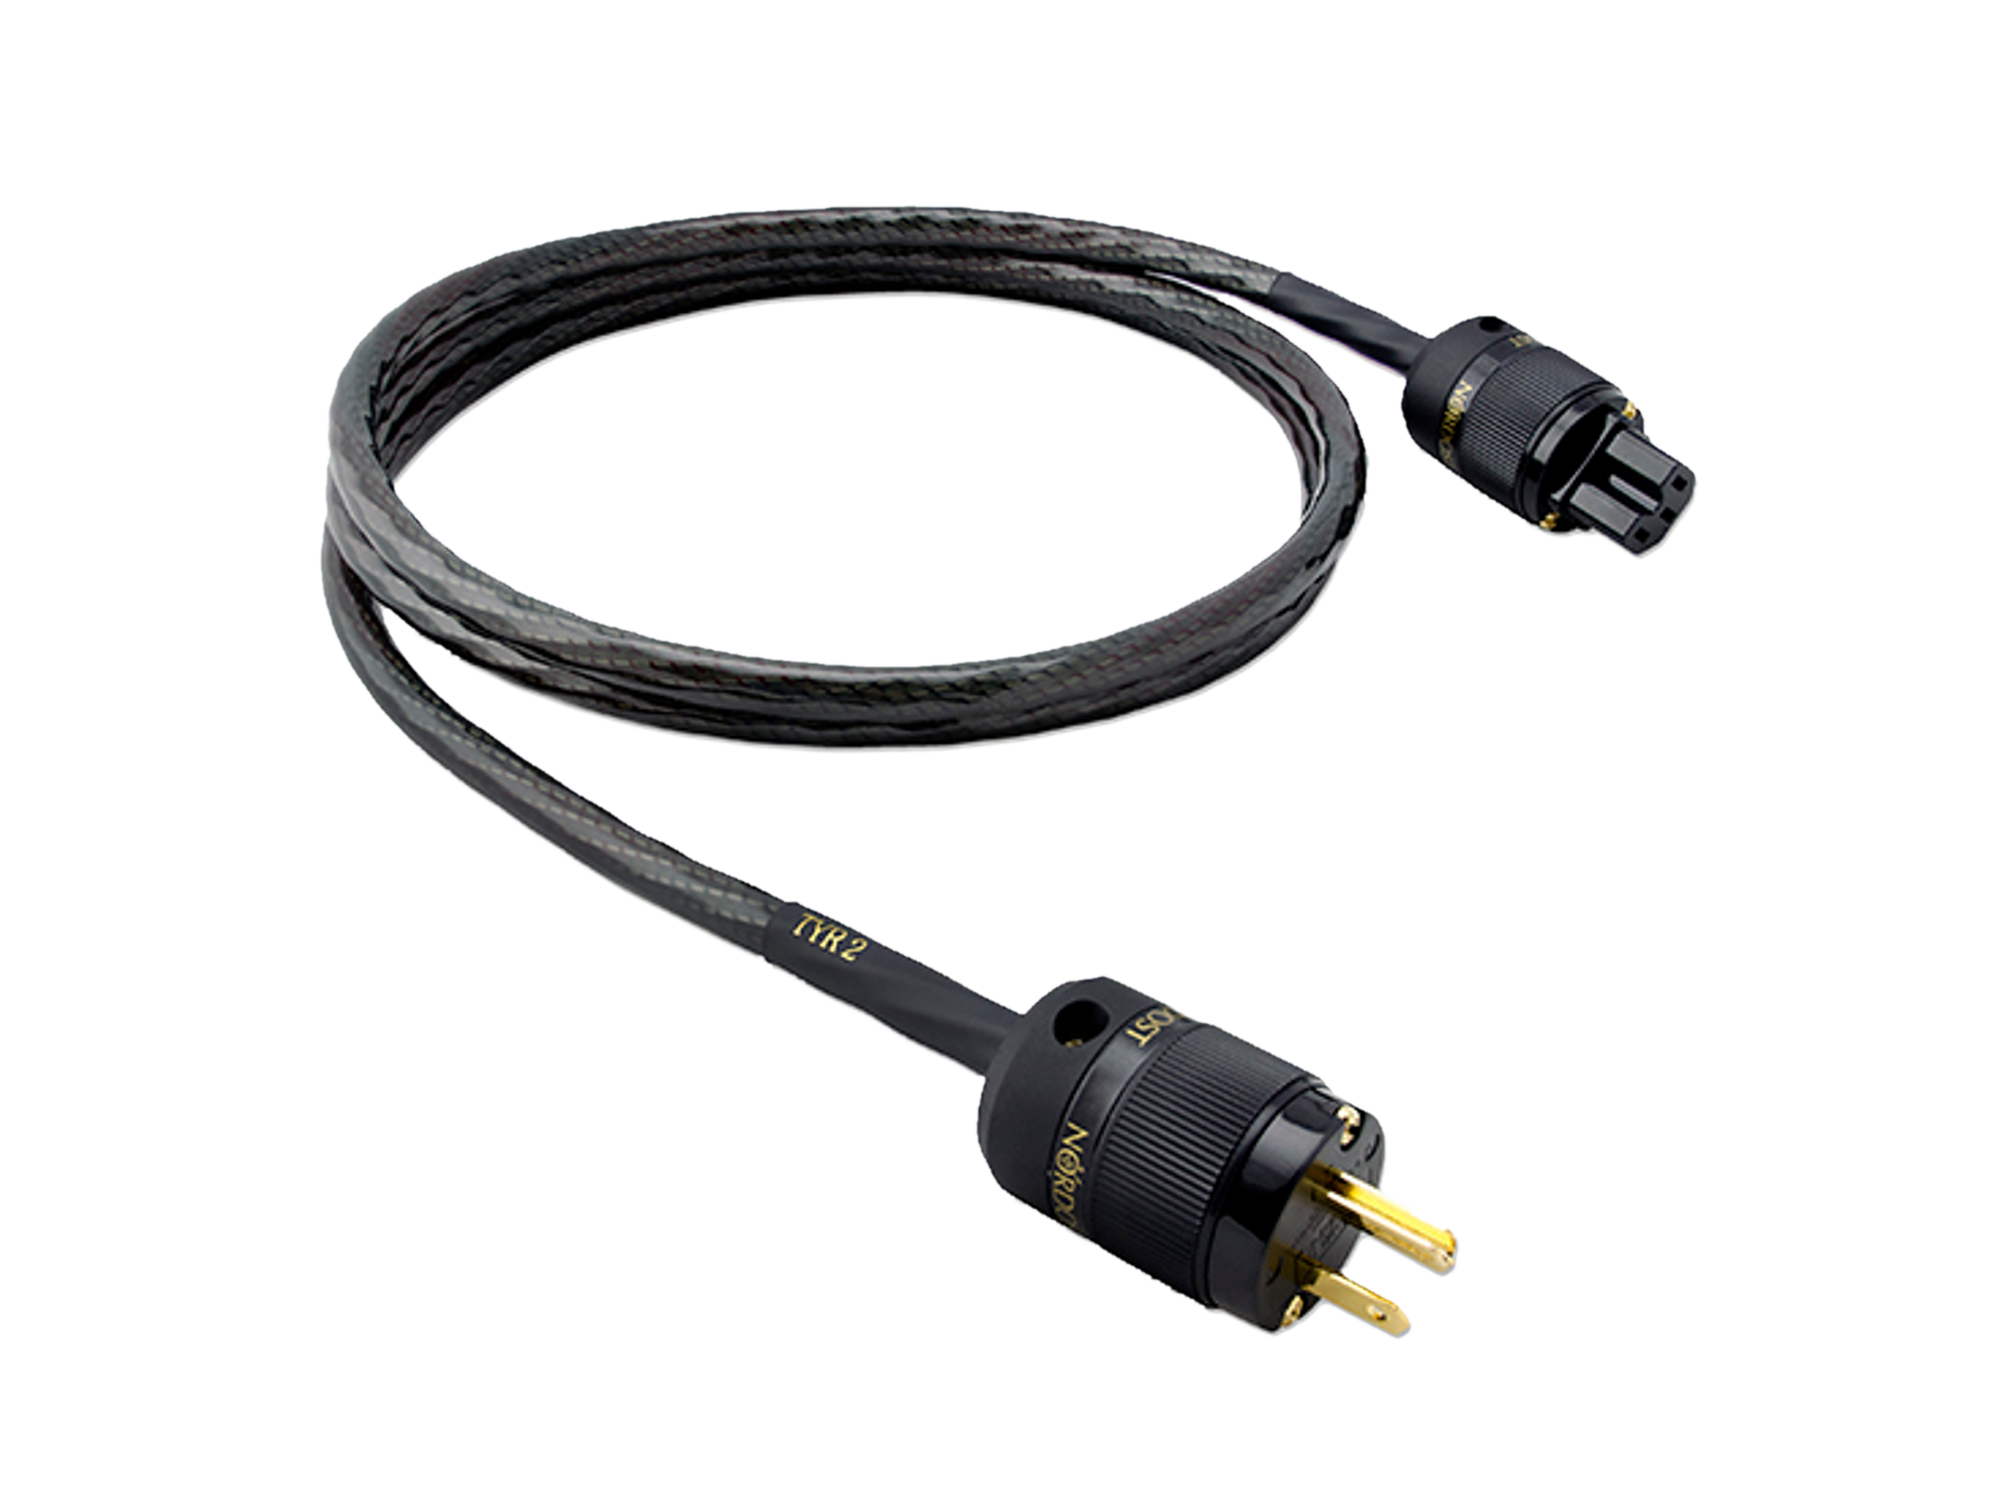 Nordost Frey Power Cord 2.0m. Силовой кабель Nordost. Nordost Valhalla Power Cable. Nordost Odin Gold сетевой кабель.